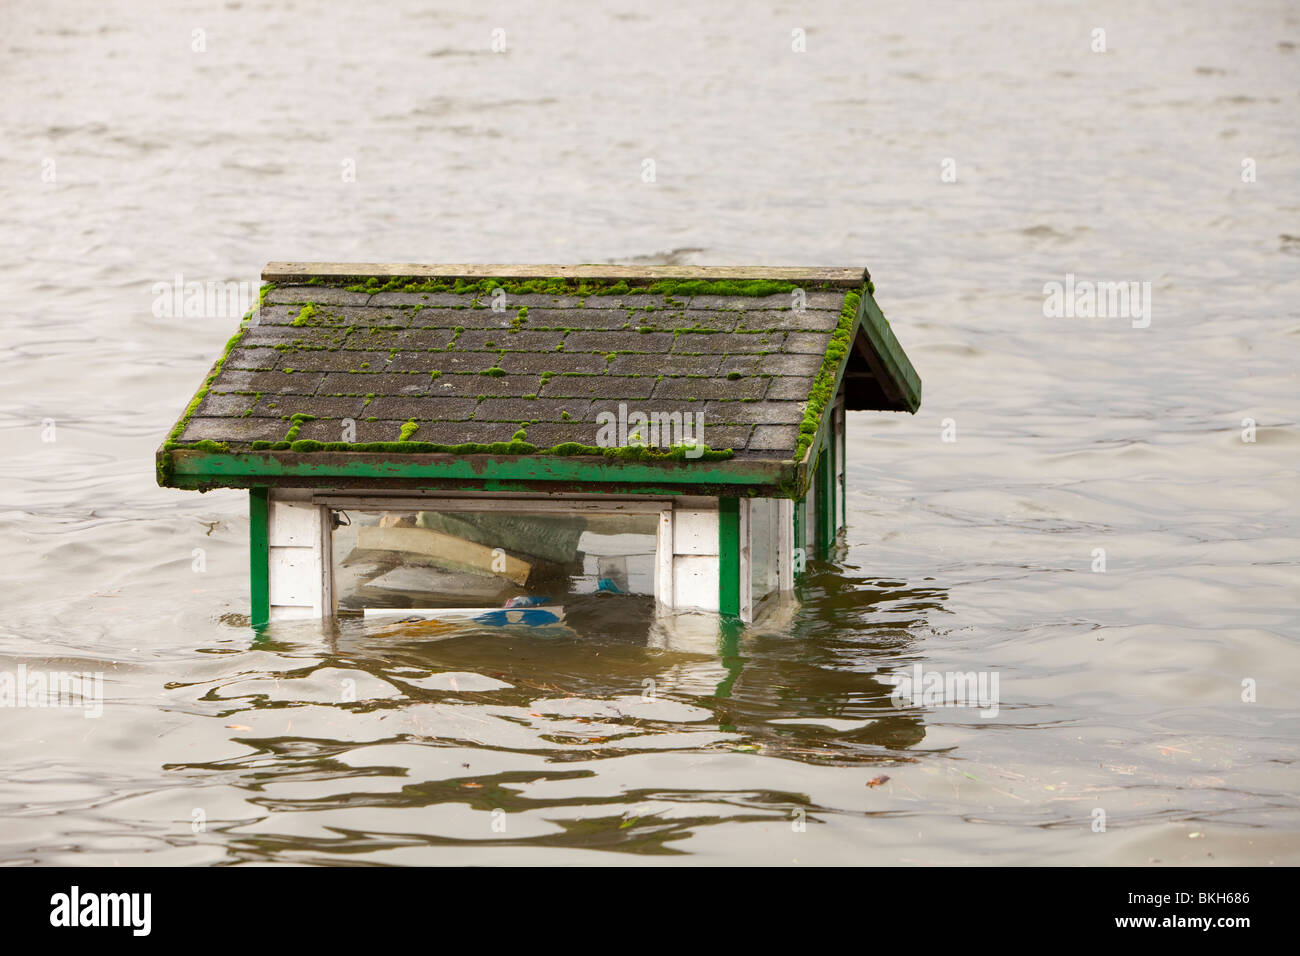 A boat hire kiosk in Ambleside during the devastating November 2009 floods Stock Photo